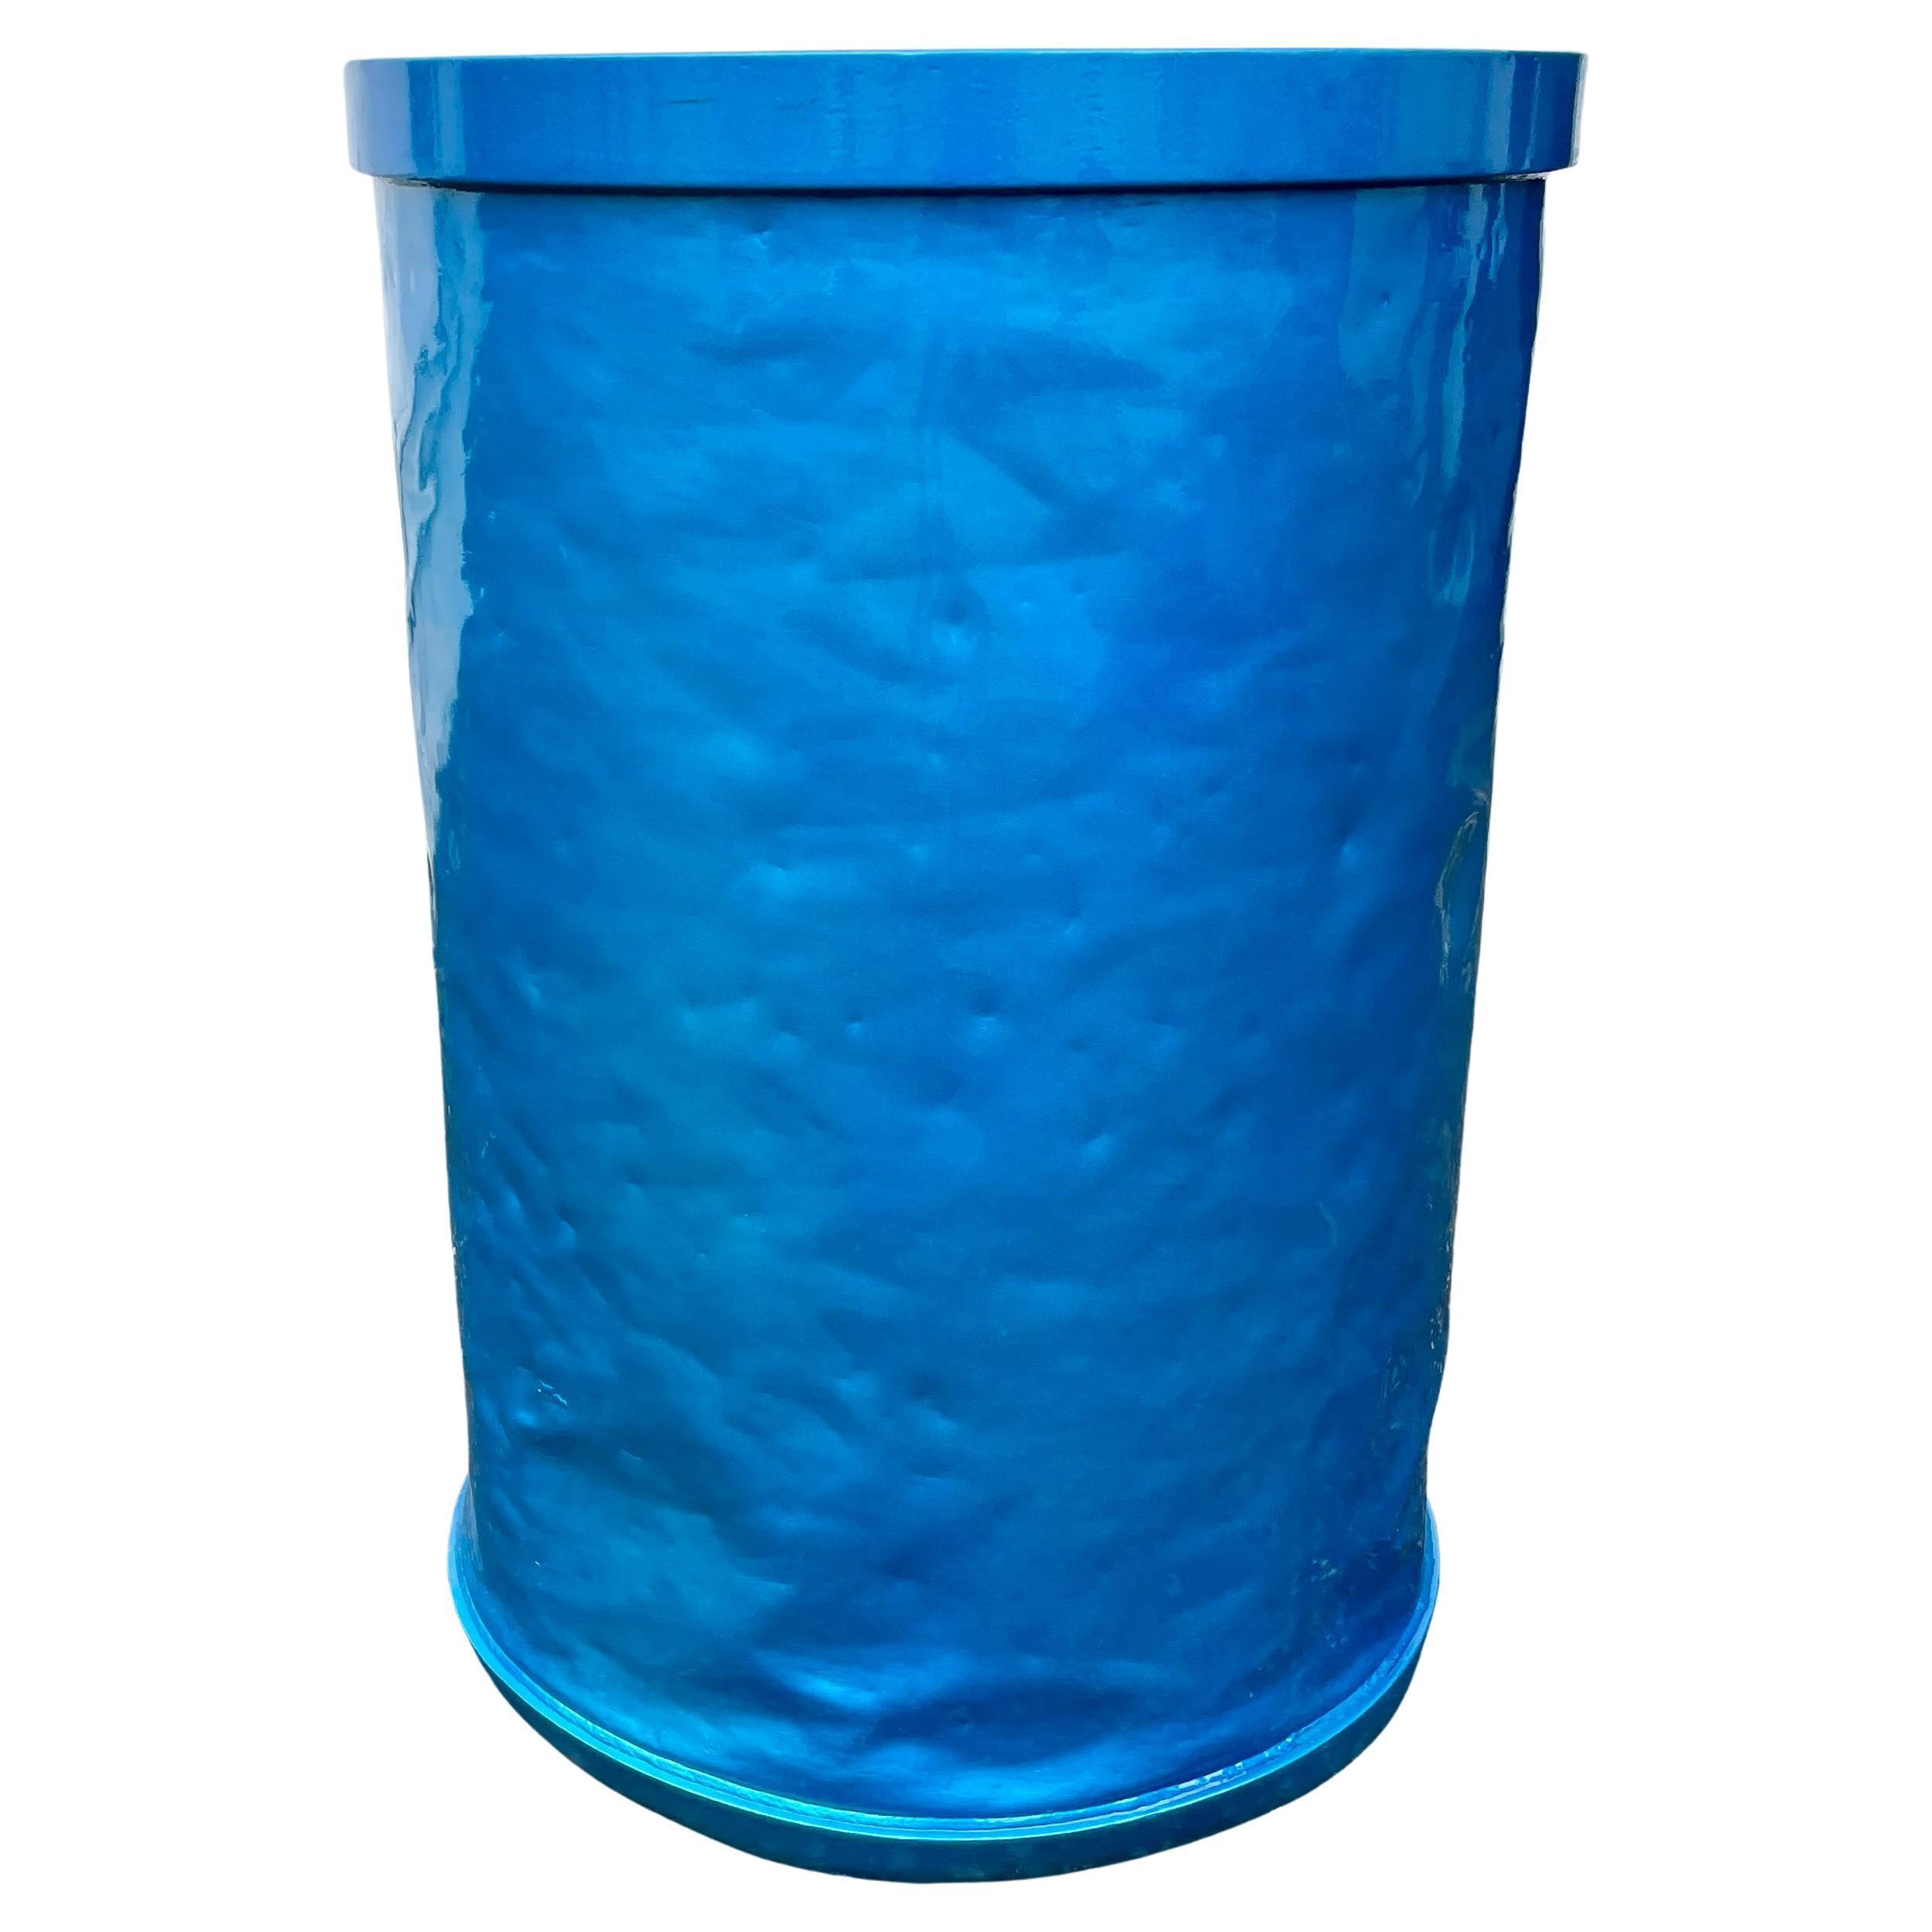 Industrial Aluminum Barrel Umbrella Stand, Powder Coated in Bright Blue